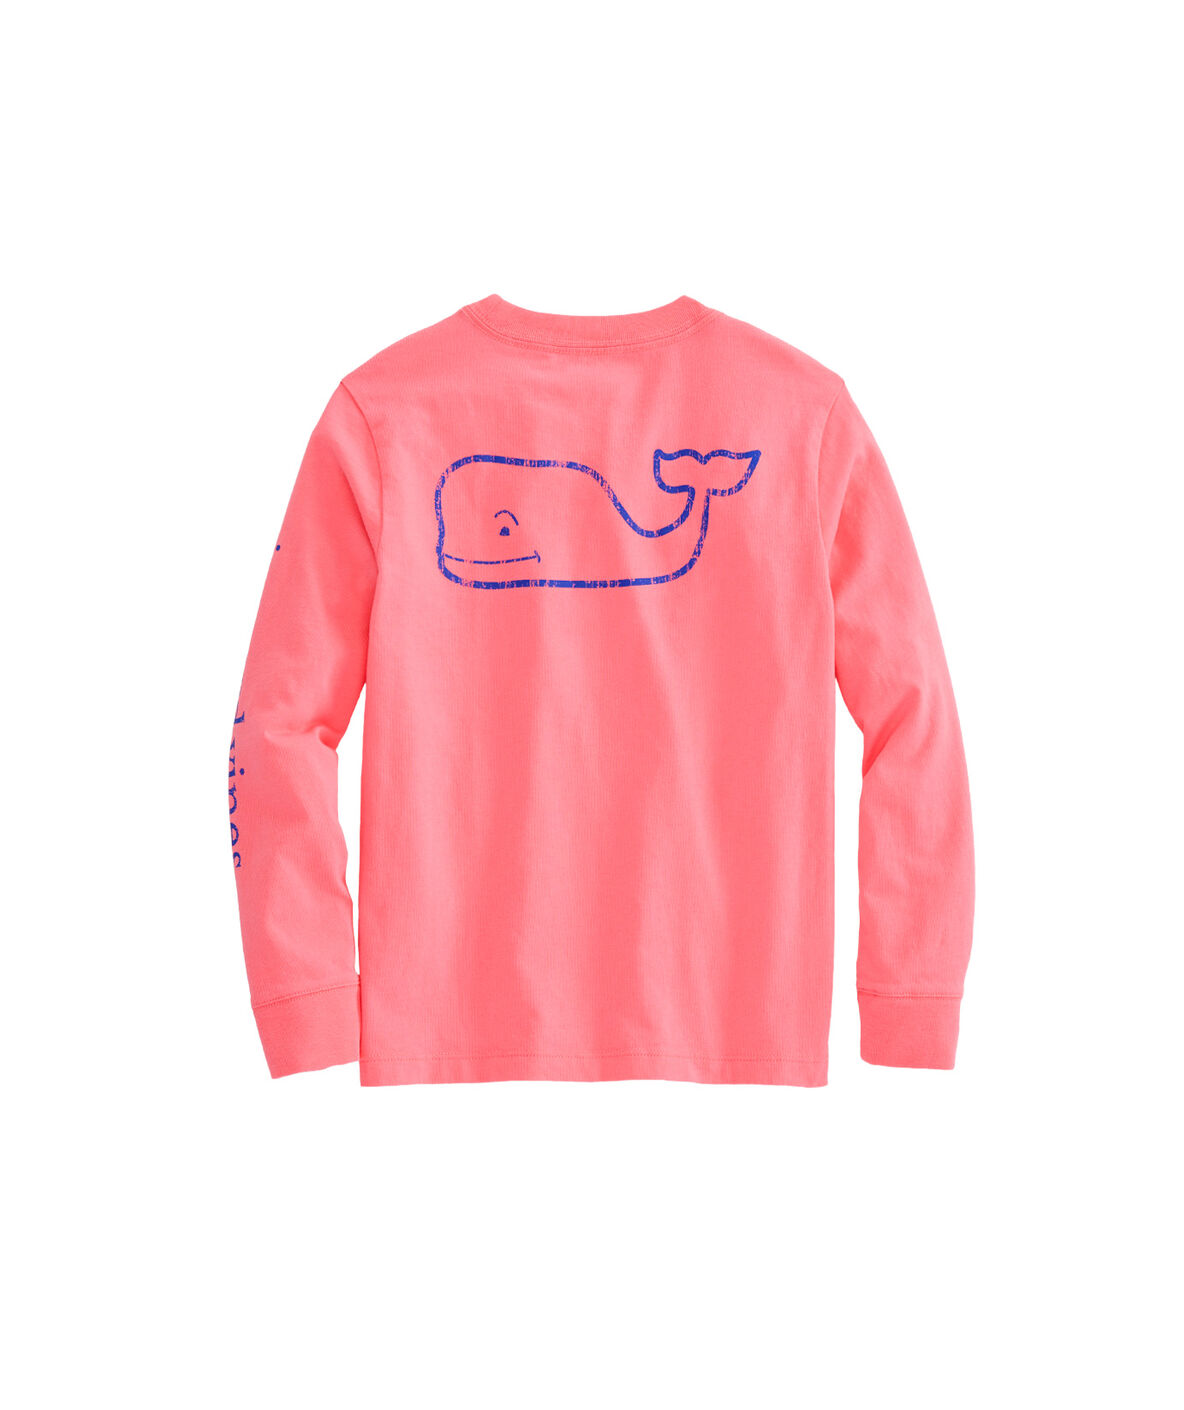 Shop Boys Long-Sleeve Vintage Whale Graphic T-Shirt at vineyard vines